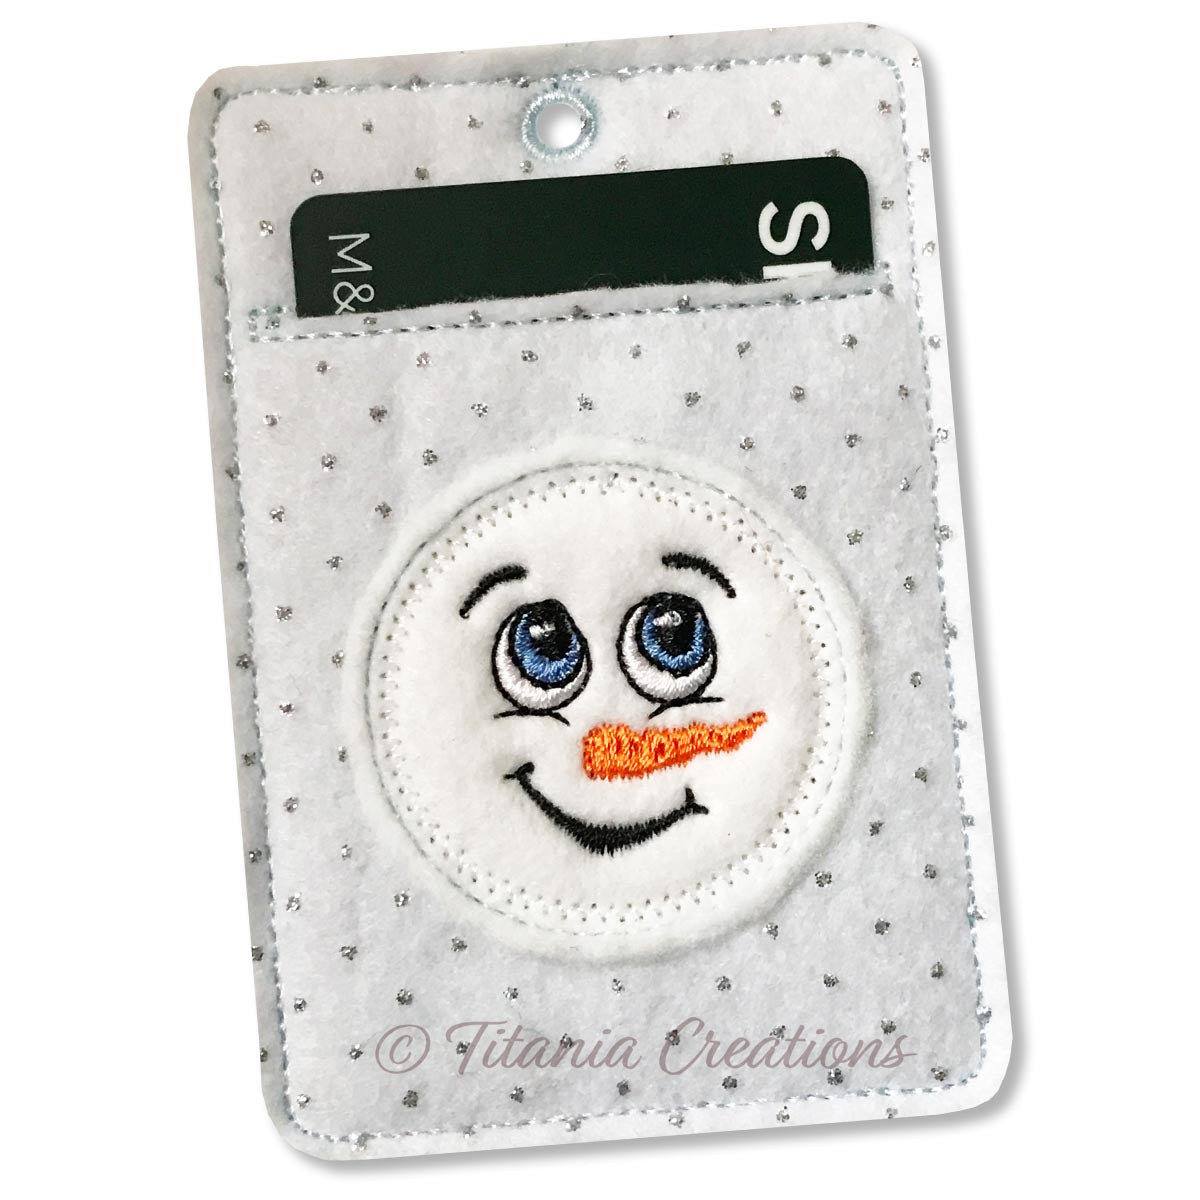 ITH Snowman Gift Card Holder 4x4